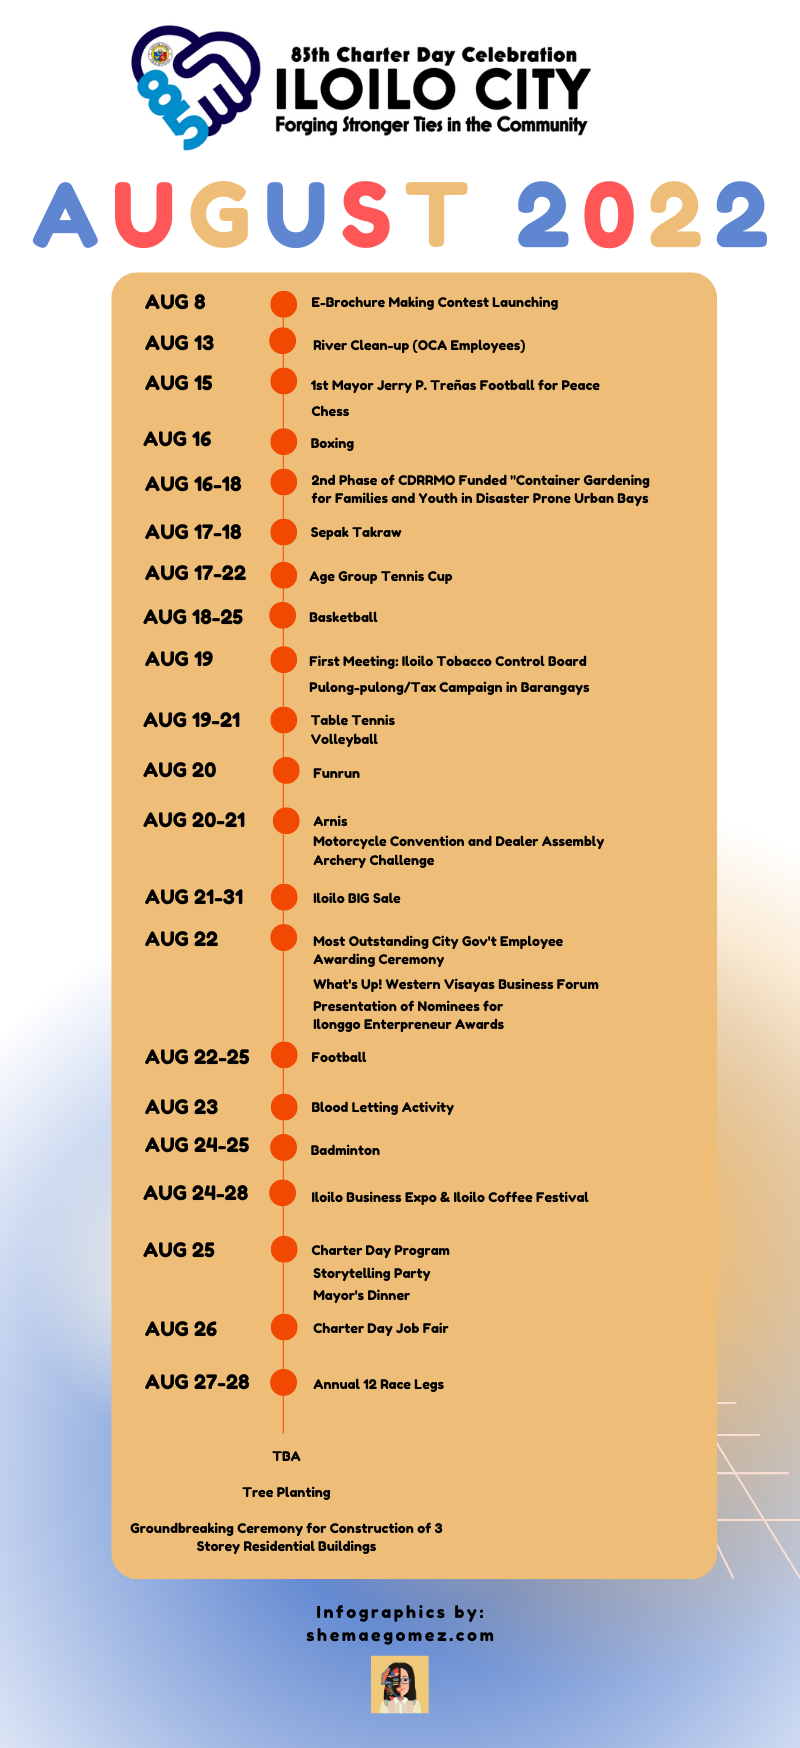 Iloilo City 85th Charter Schedule of Activities